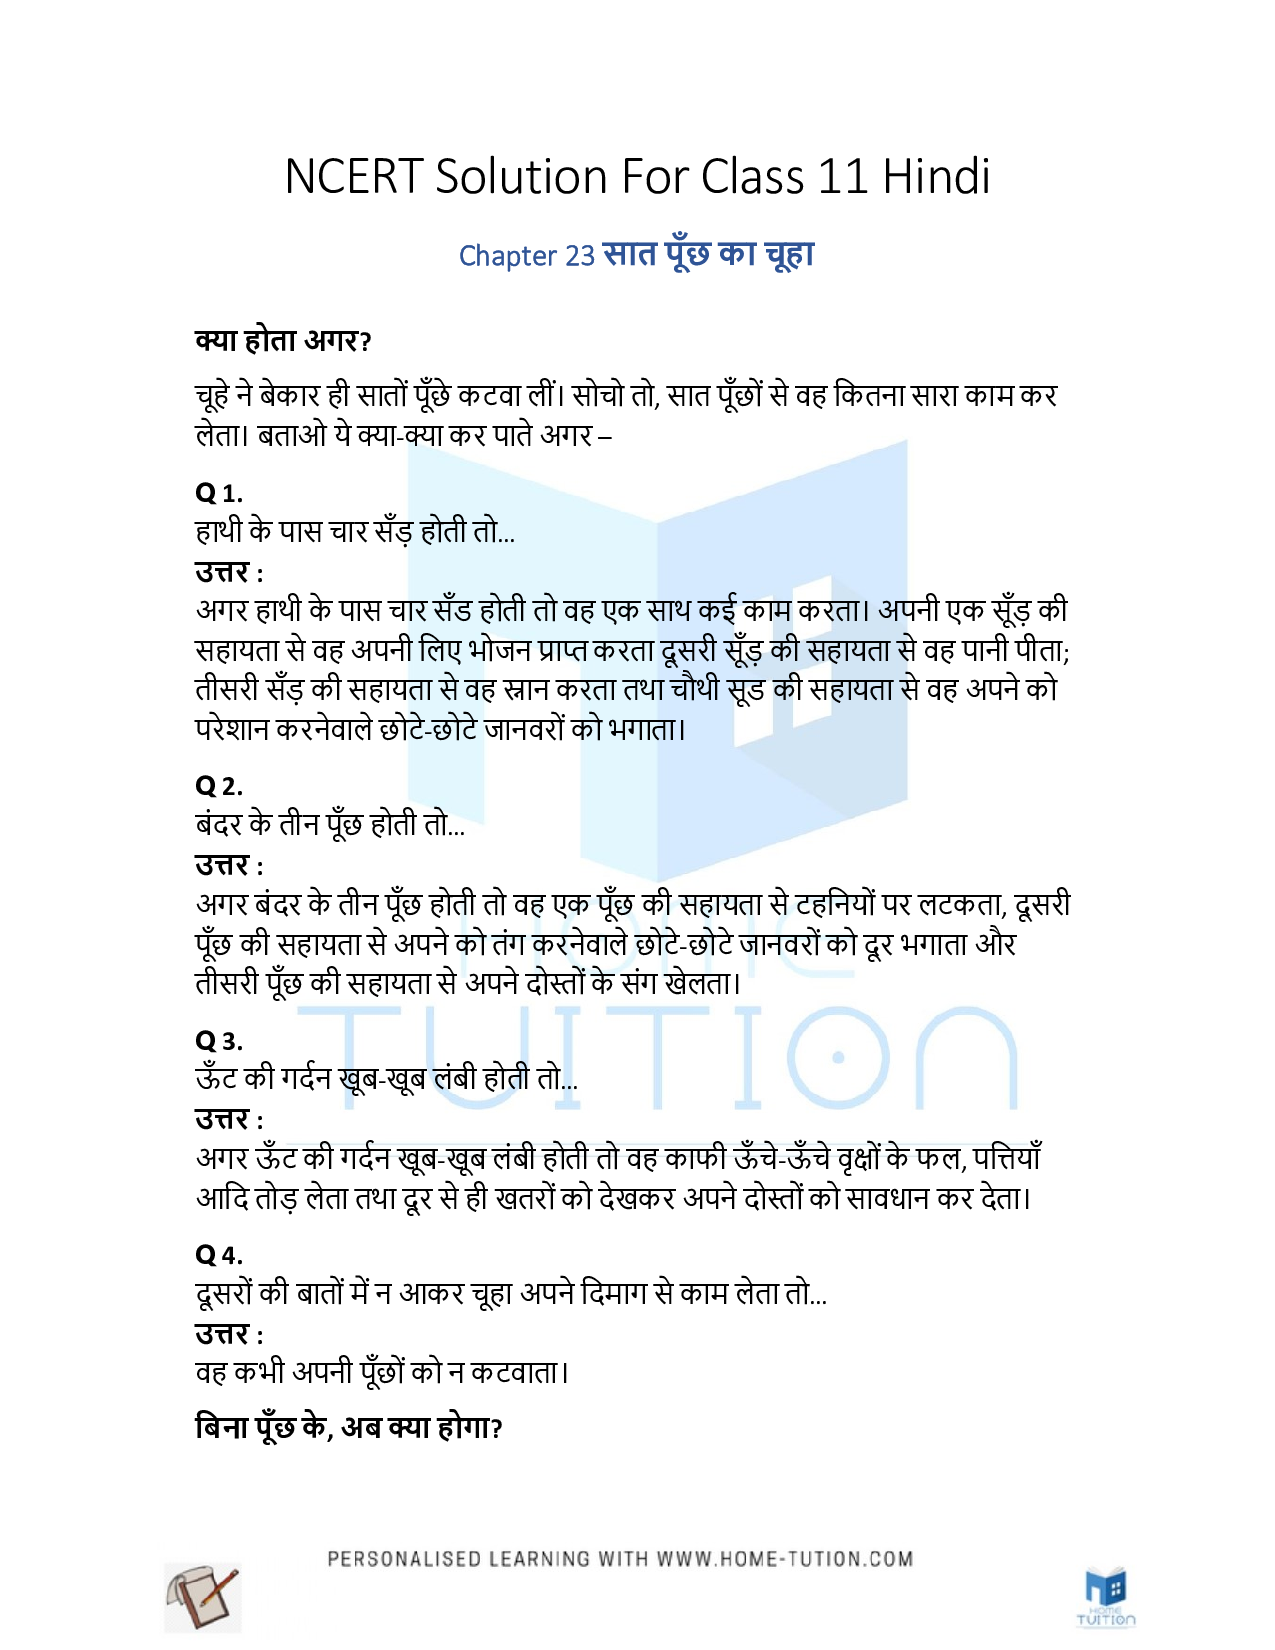 NCERT Solution for Class 1 Hindi Chapter 23 Saat Poonch Ka Chuha (सात-पूँछ-का-चूहा)